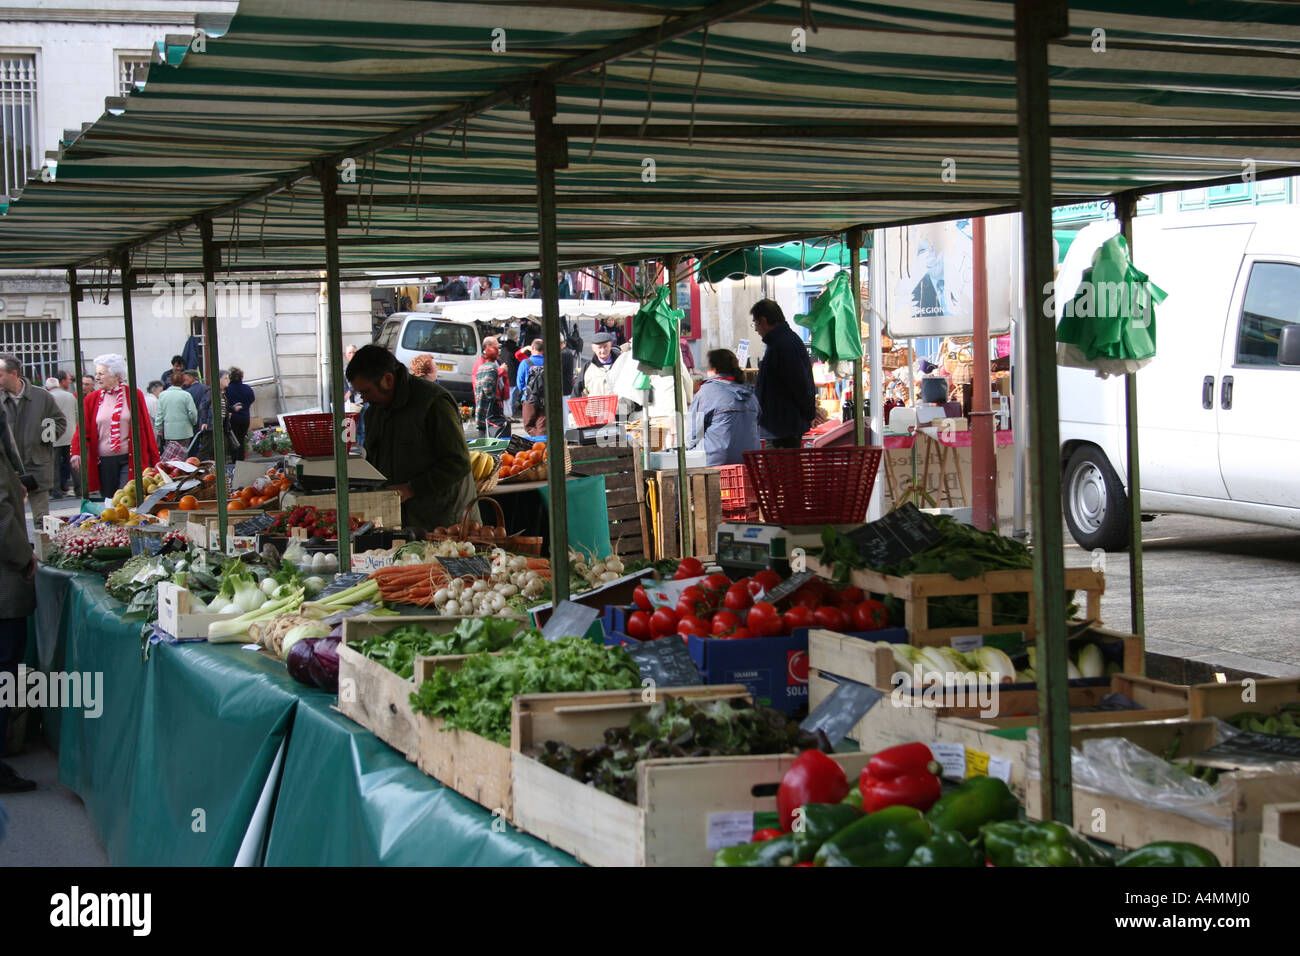 Vegetable market in Fontenay le Comte, Vendee France Stock Photo